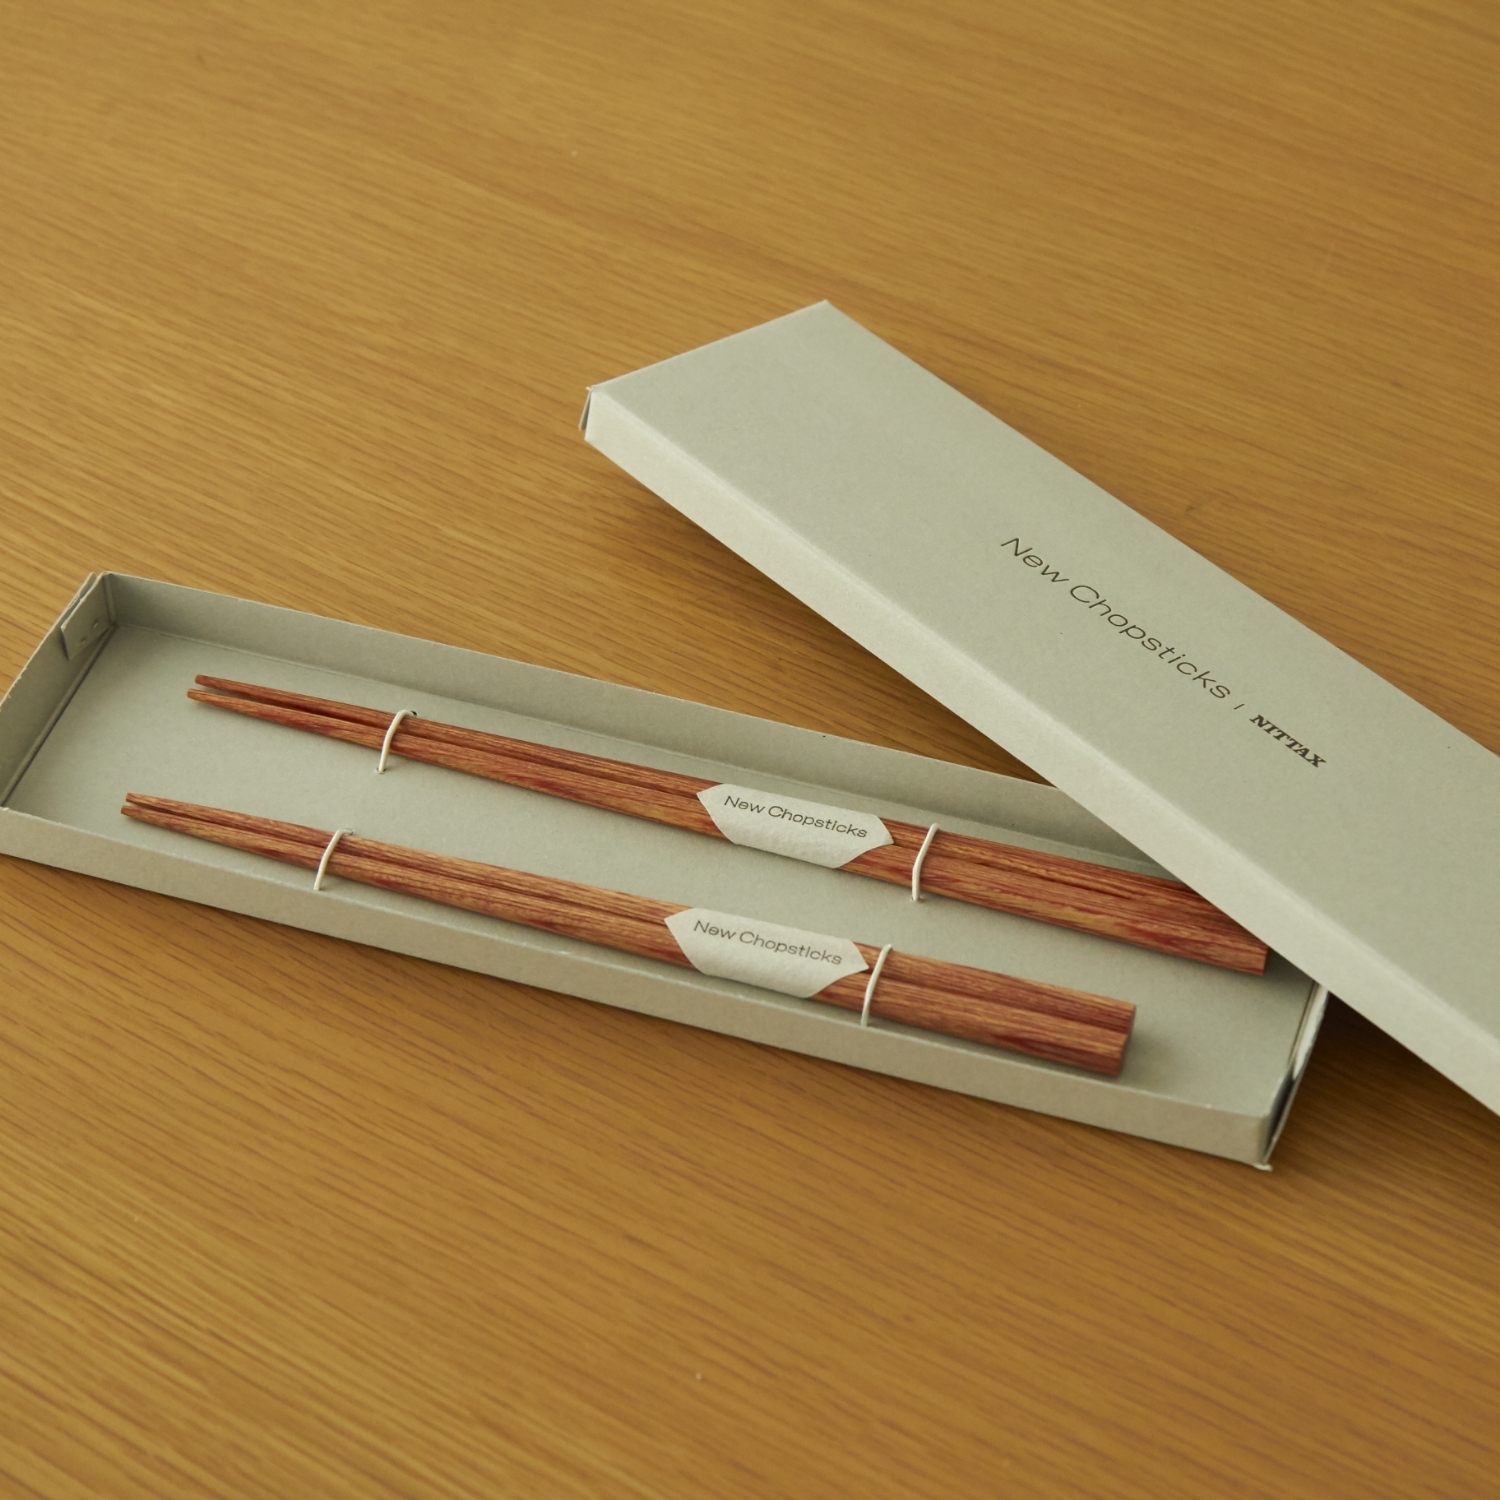 New Chopsticks 2膳用ギフトパッケージ -New Chopsticks 2膳用の専用